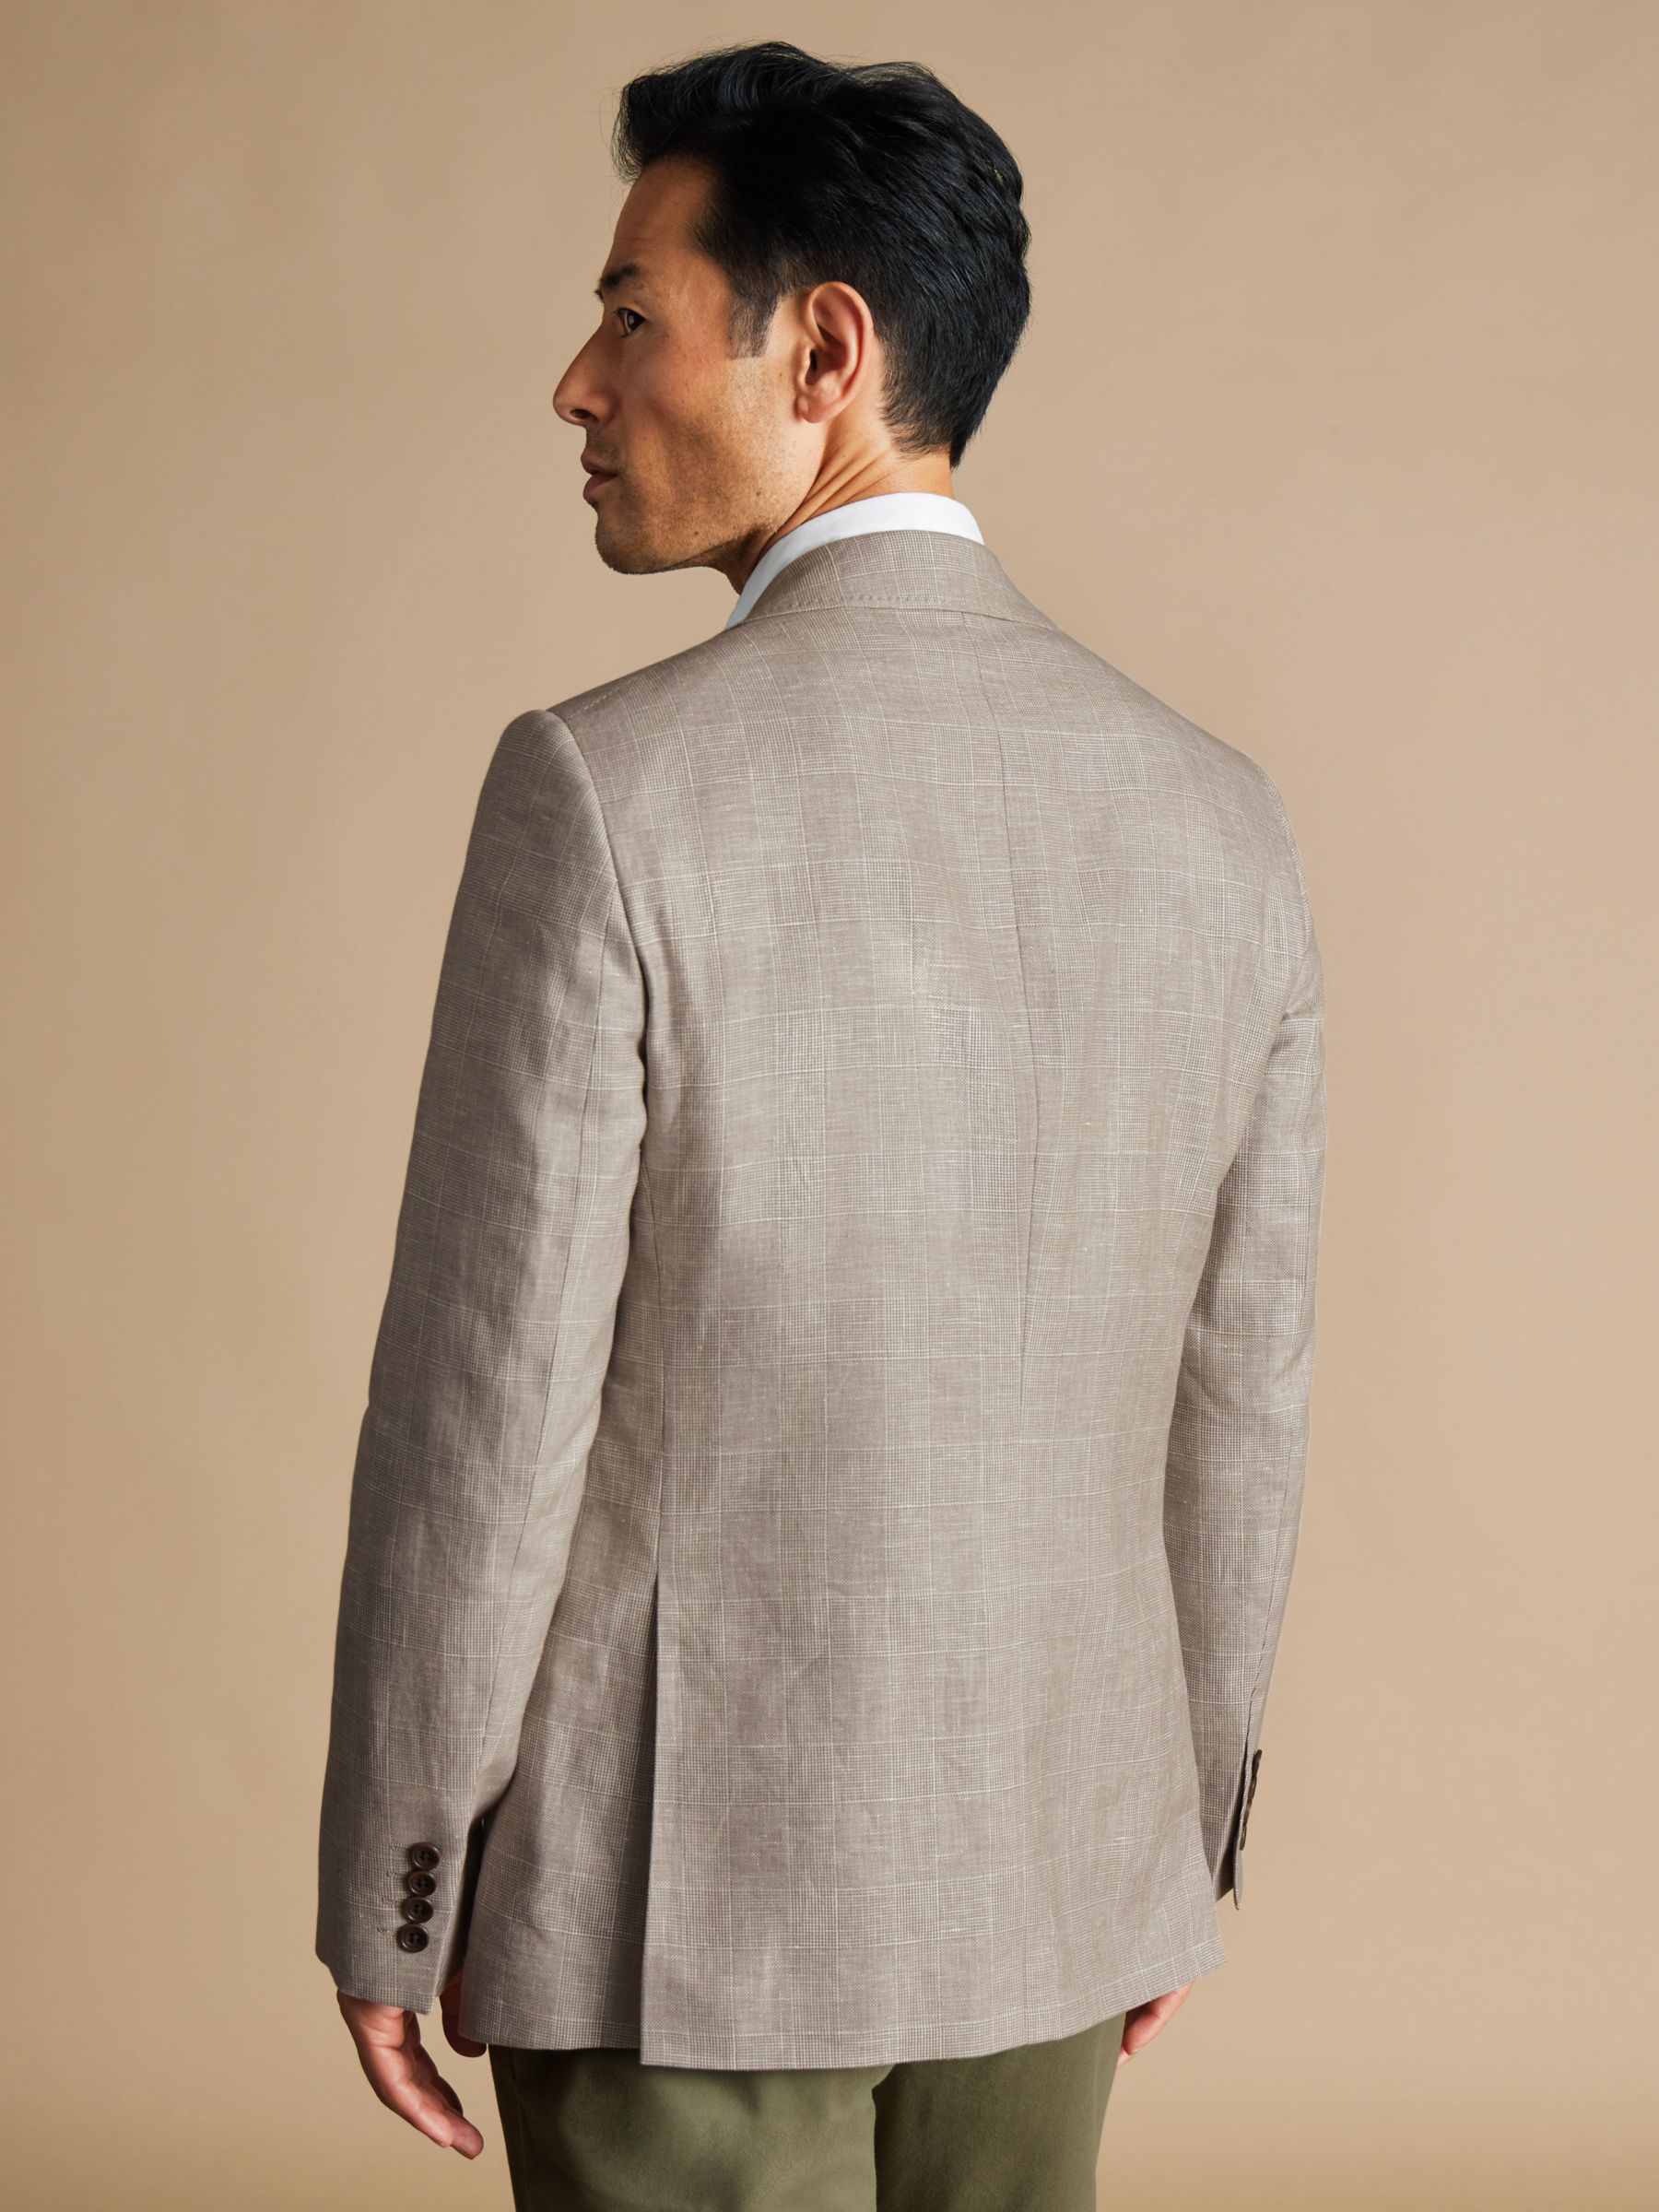 Charles Tyrwhitt Linen and Cotton Blend Slim Fit Blazer, Mocha, 36R